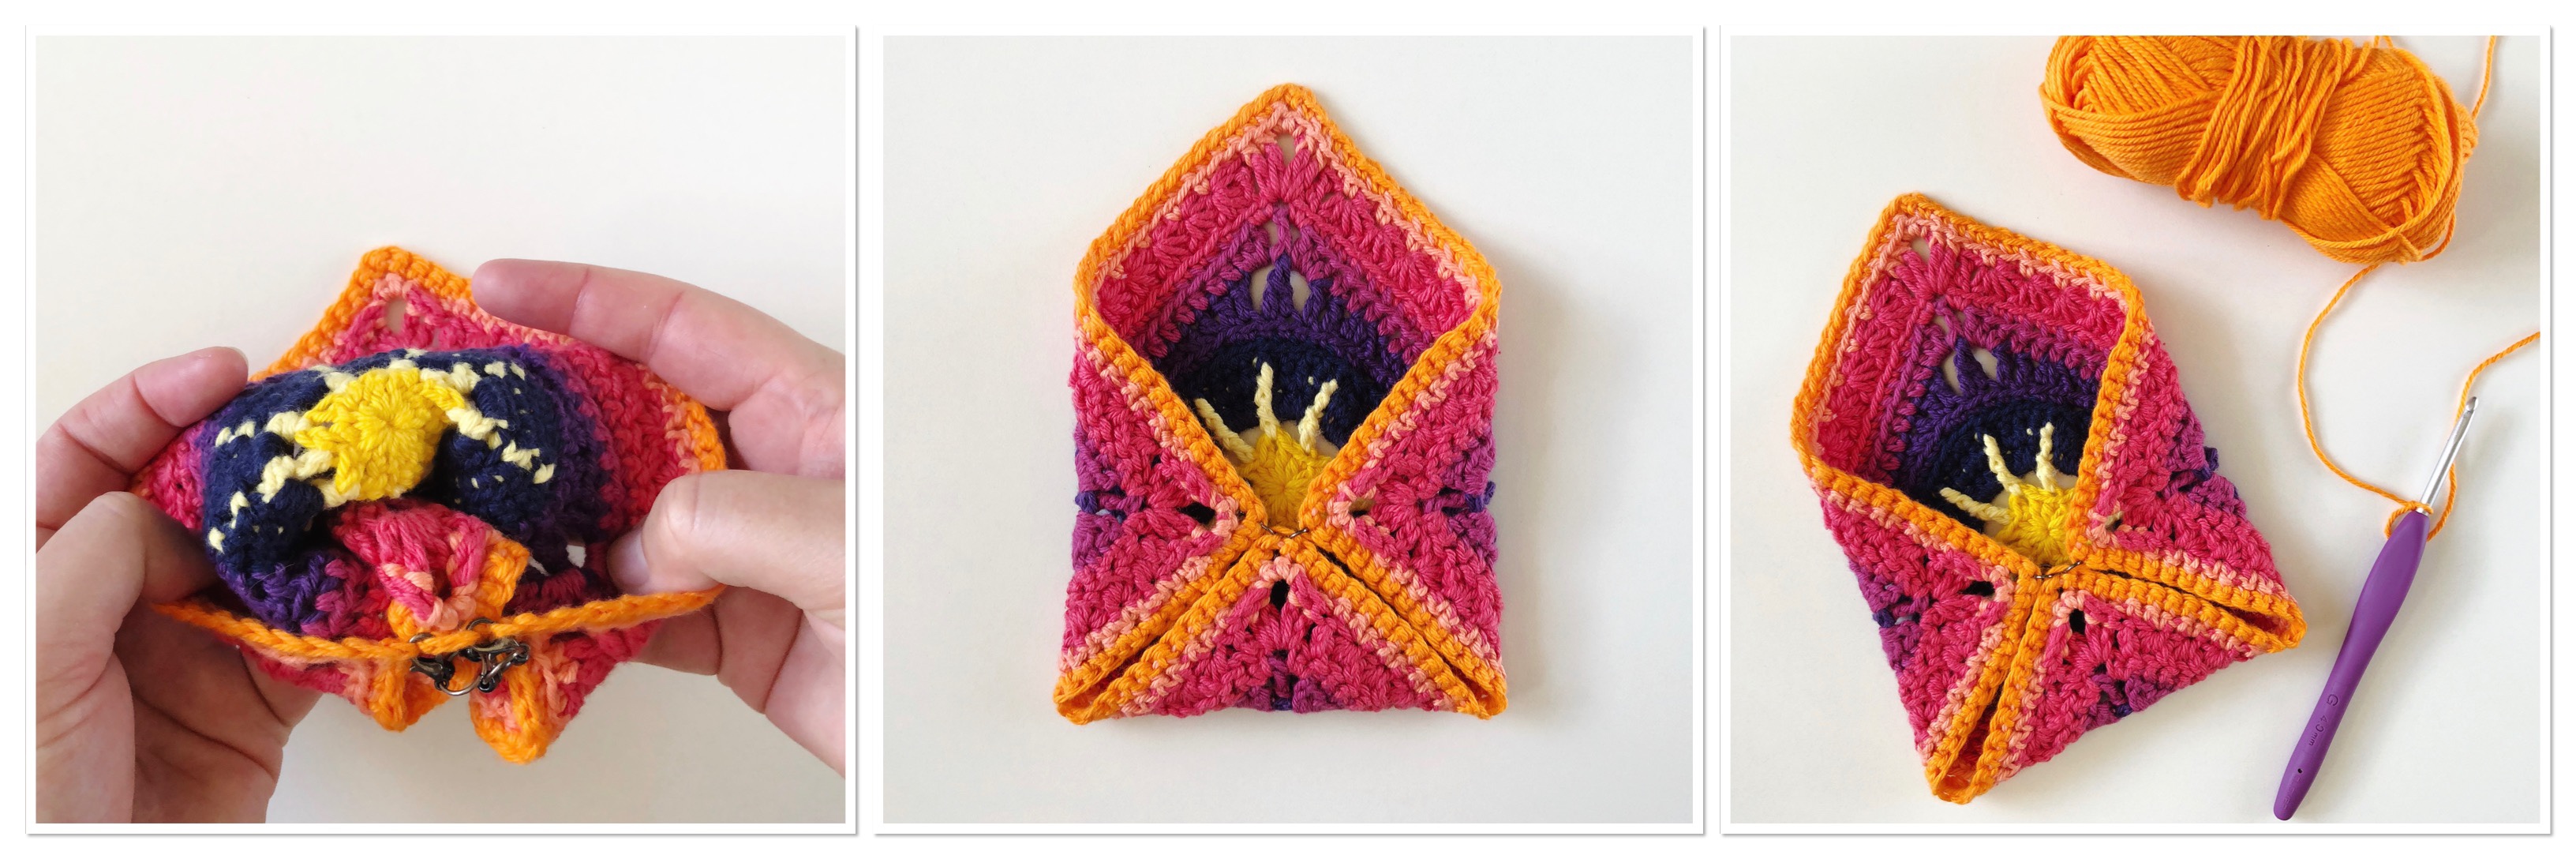 Kensington Tote Bag - Tunisian Crochet Purse Tutorial - TL Yarn Crafts